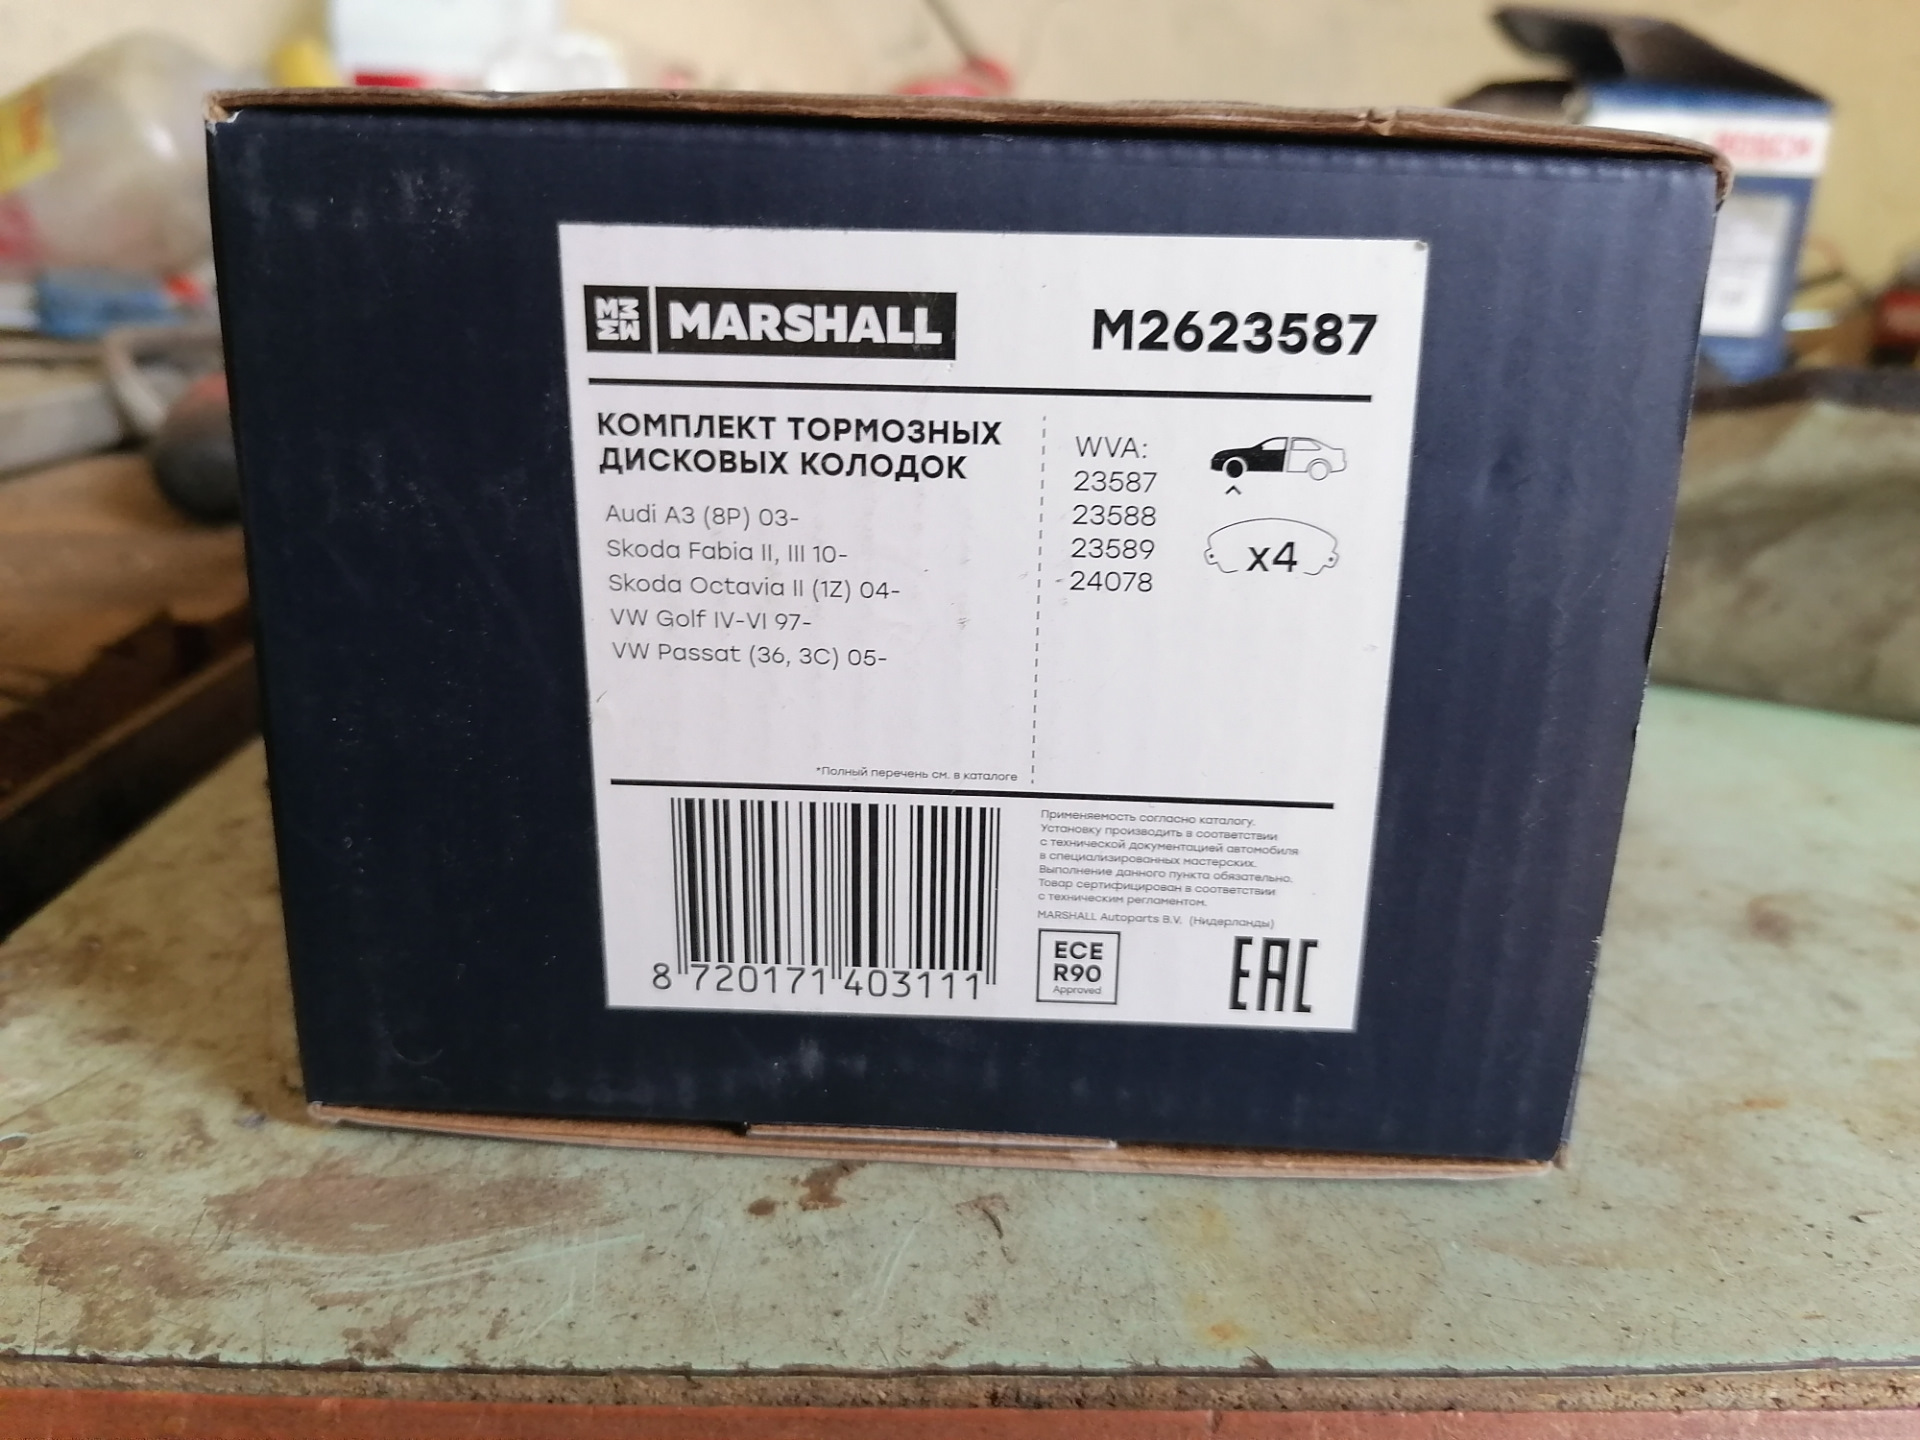 Производитель запчастей маршал. Колодки Маршал m2623587. M2623587 Marshall тормозные совместимость. M2623587. Marshall запчасти.